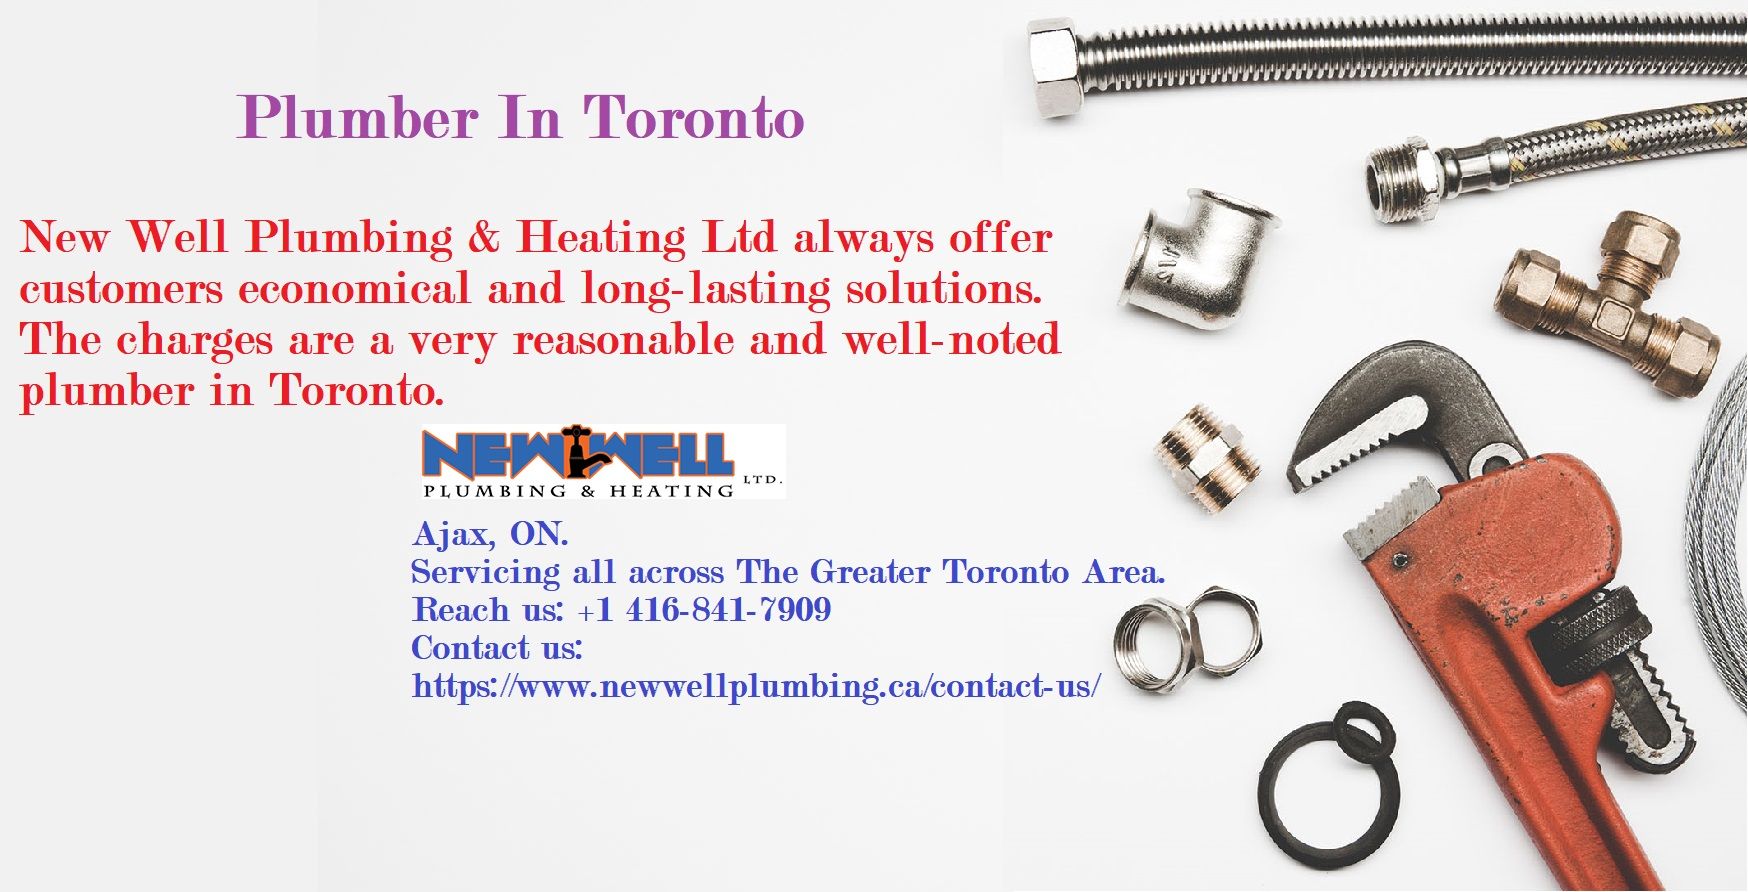 New Well Plumbing & Heating Ltd